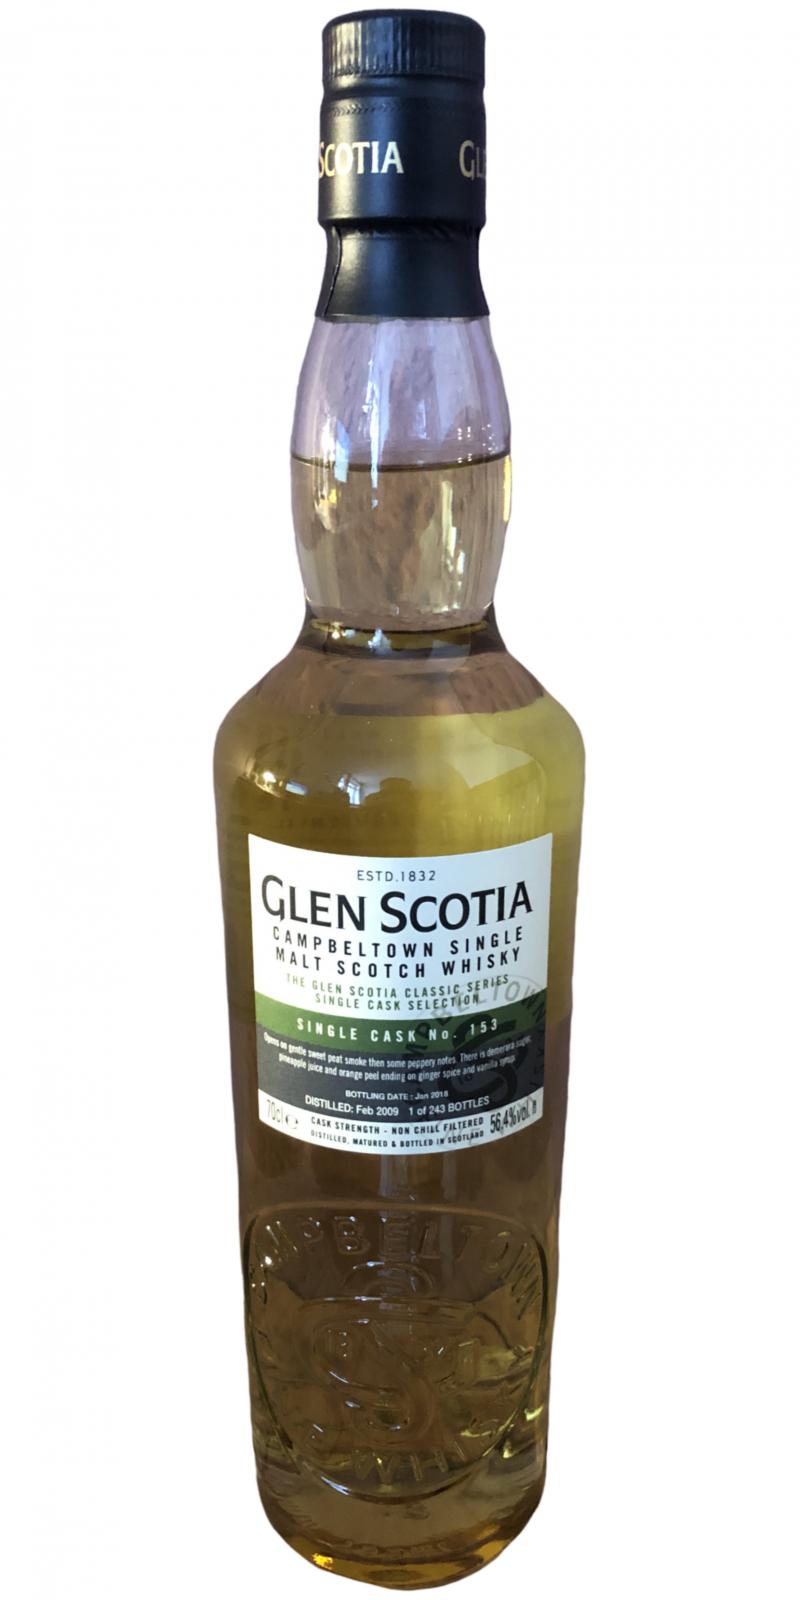 Glen Scotia 2009 Limited Edition Single Cask #153 56.4% 700ml